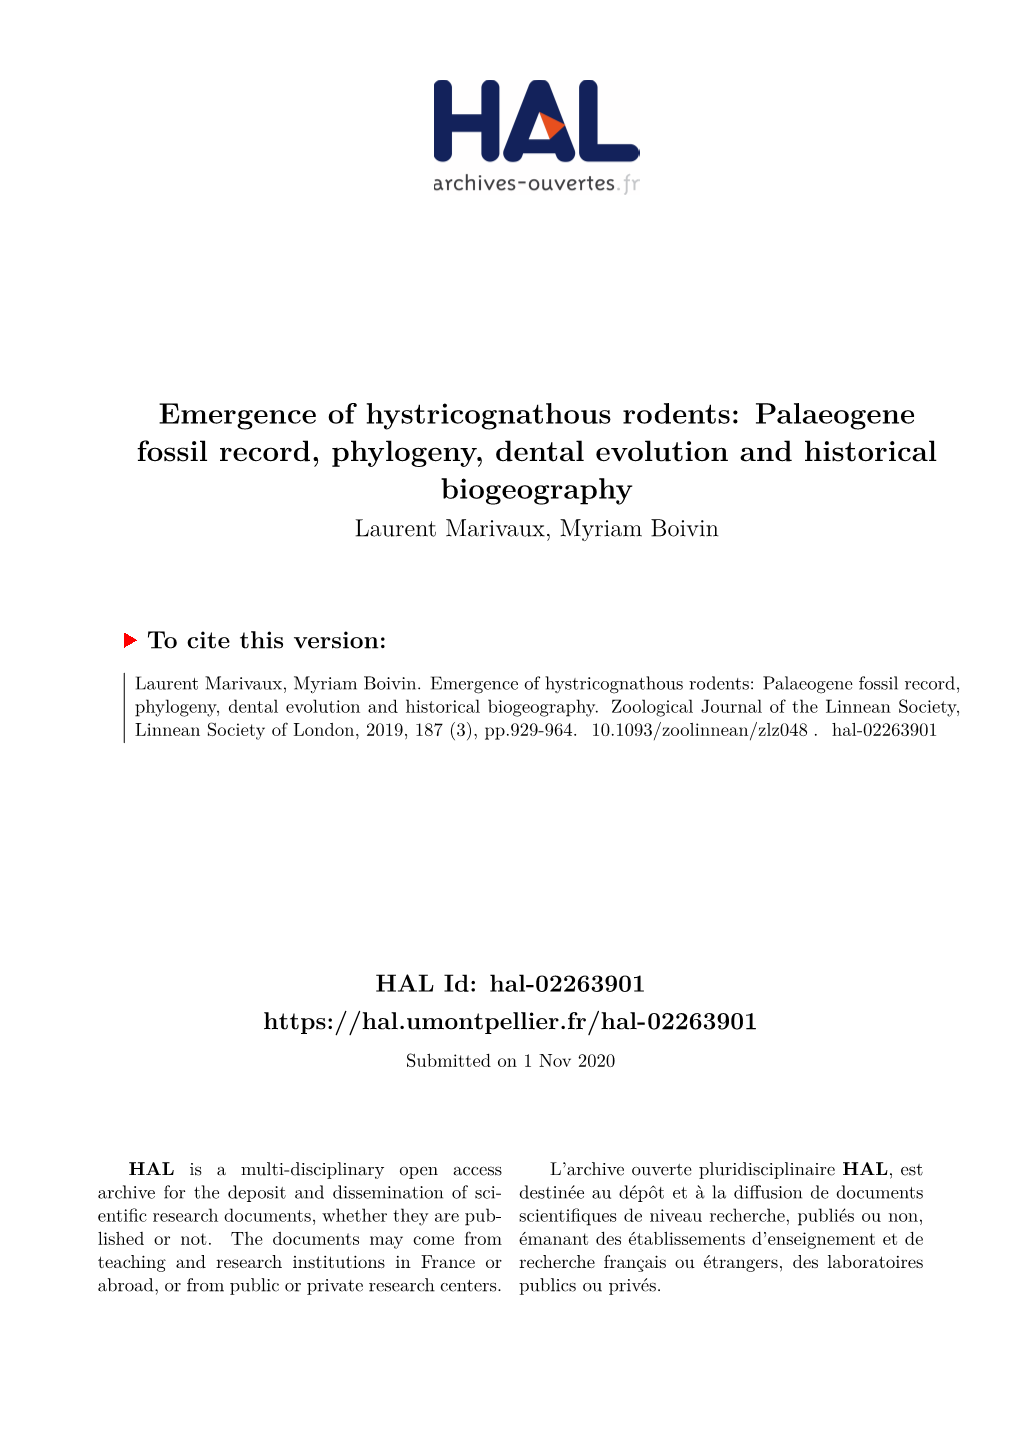 Palaeogene Fossil Record, Phylogeny, Dental Evolution and Historical Biogeography Laurent Marivaux, Myriam Boivin